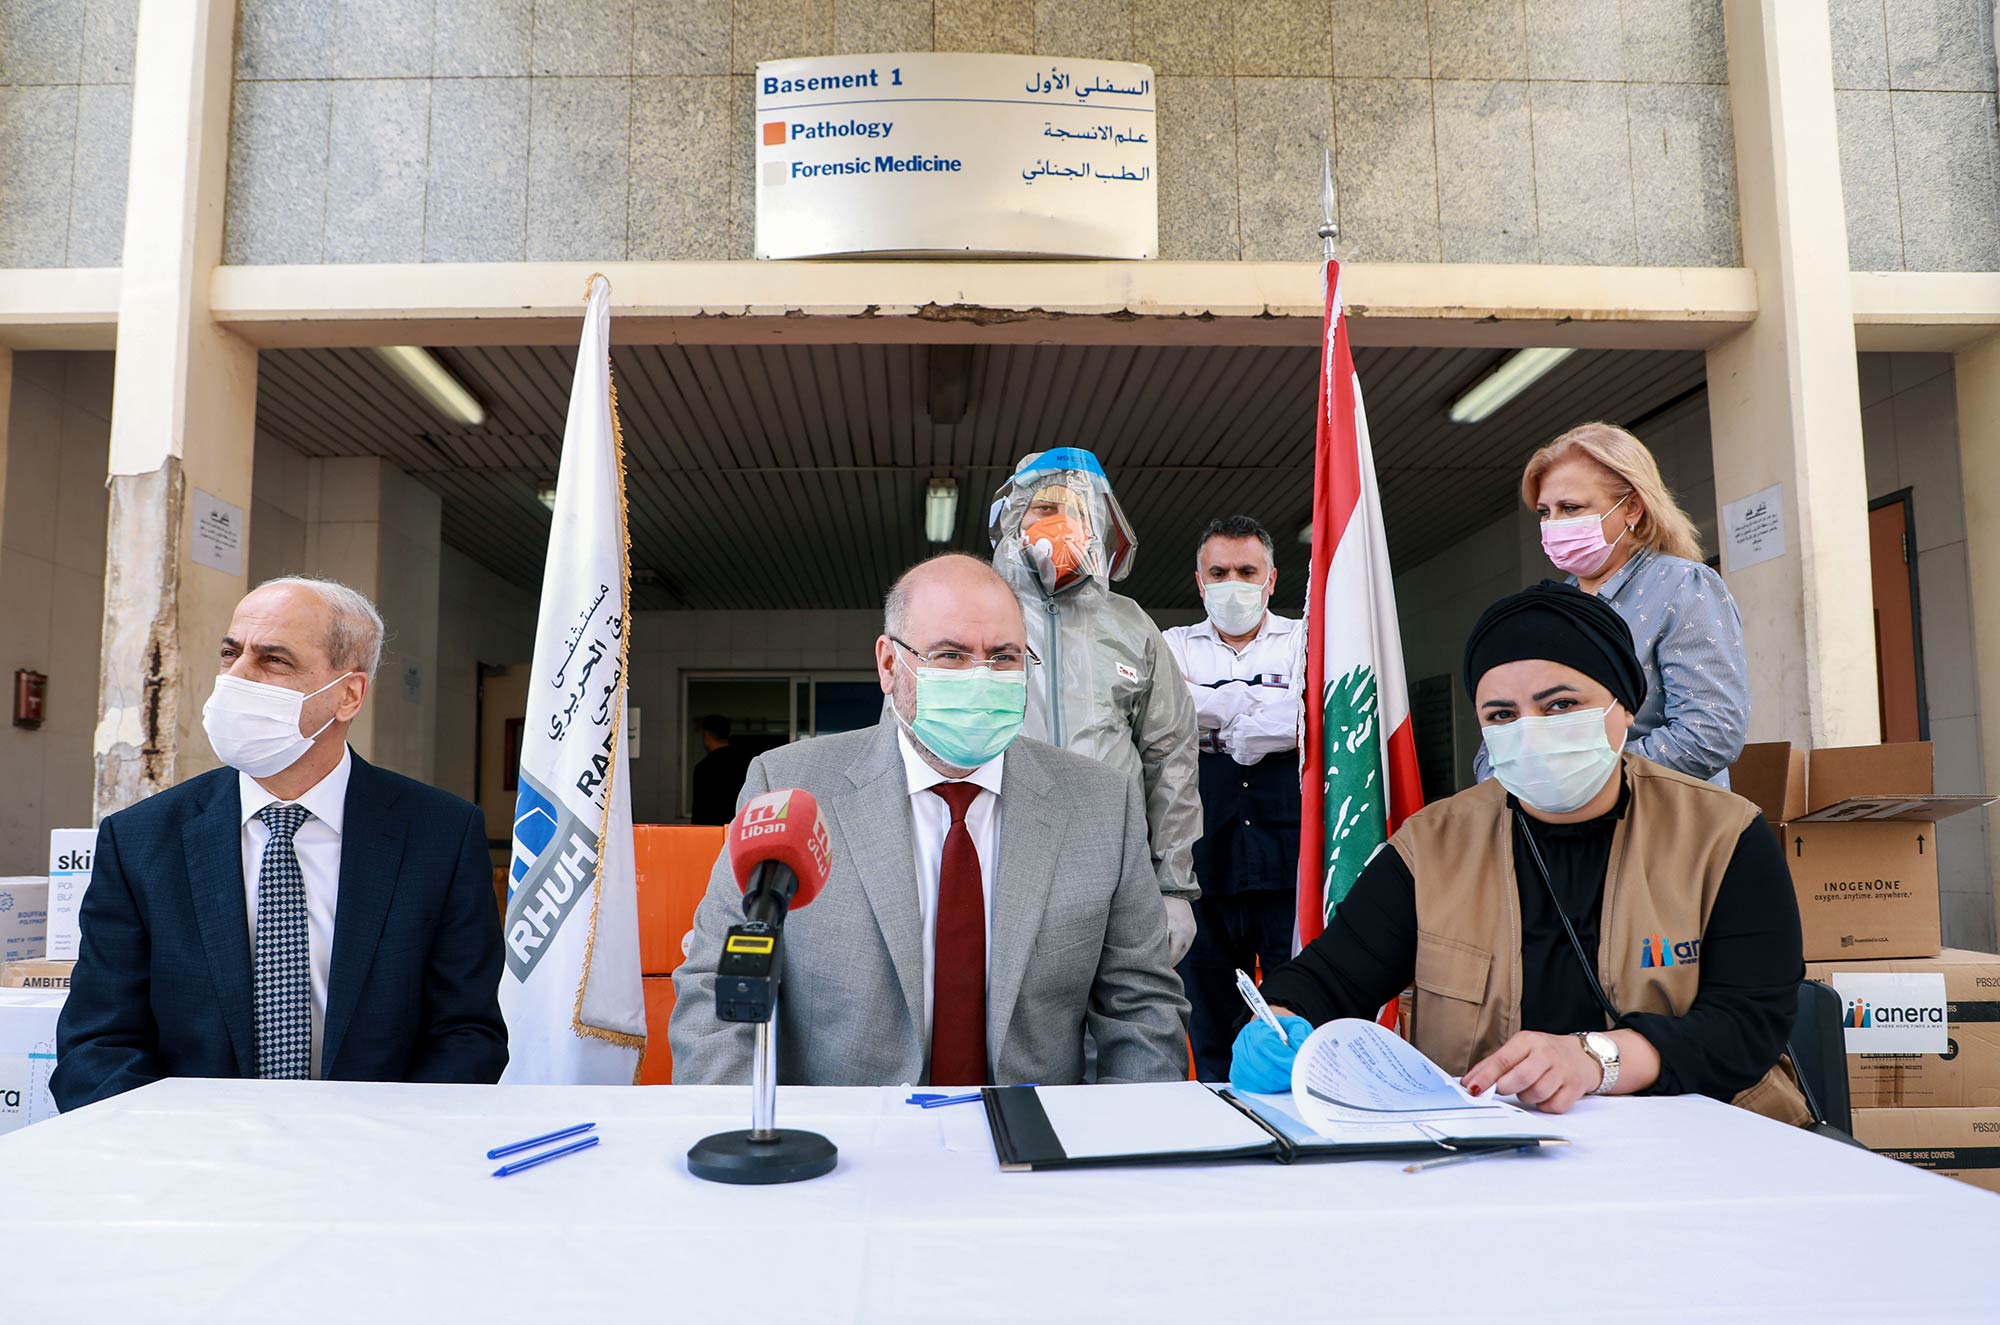 Anera at Rafik Hariri University Hospital to mark the donation of medical supplies.